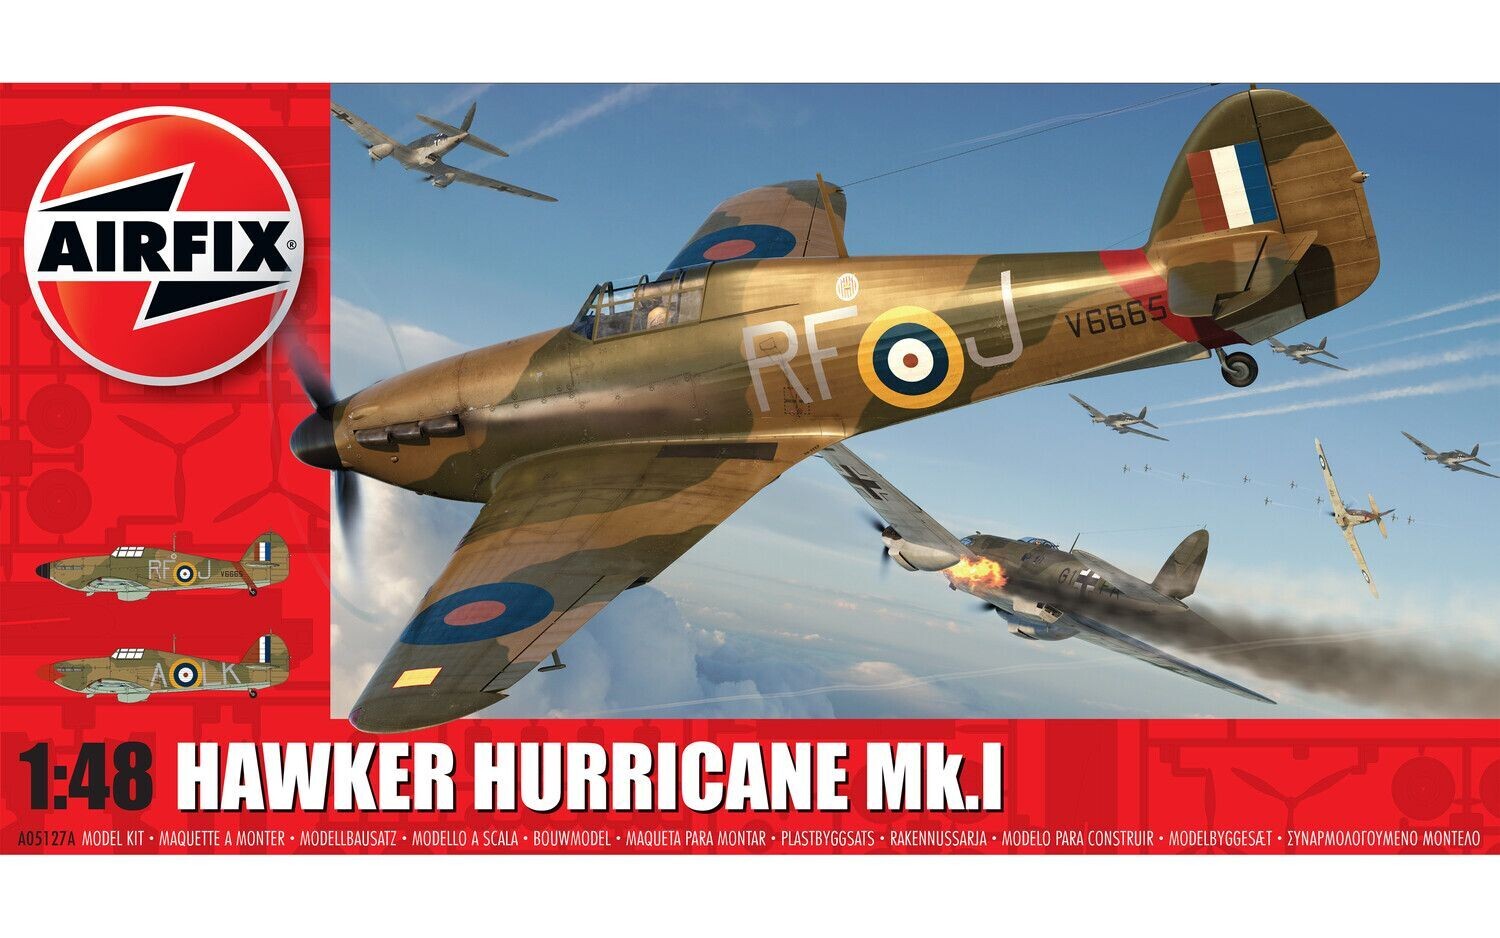 Airfix A05127A Hawker Hurricane Mk.I 1:48 Scale Plastic Model Kit